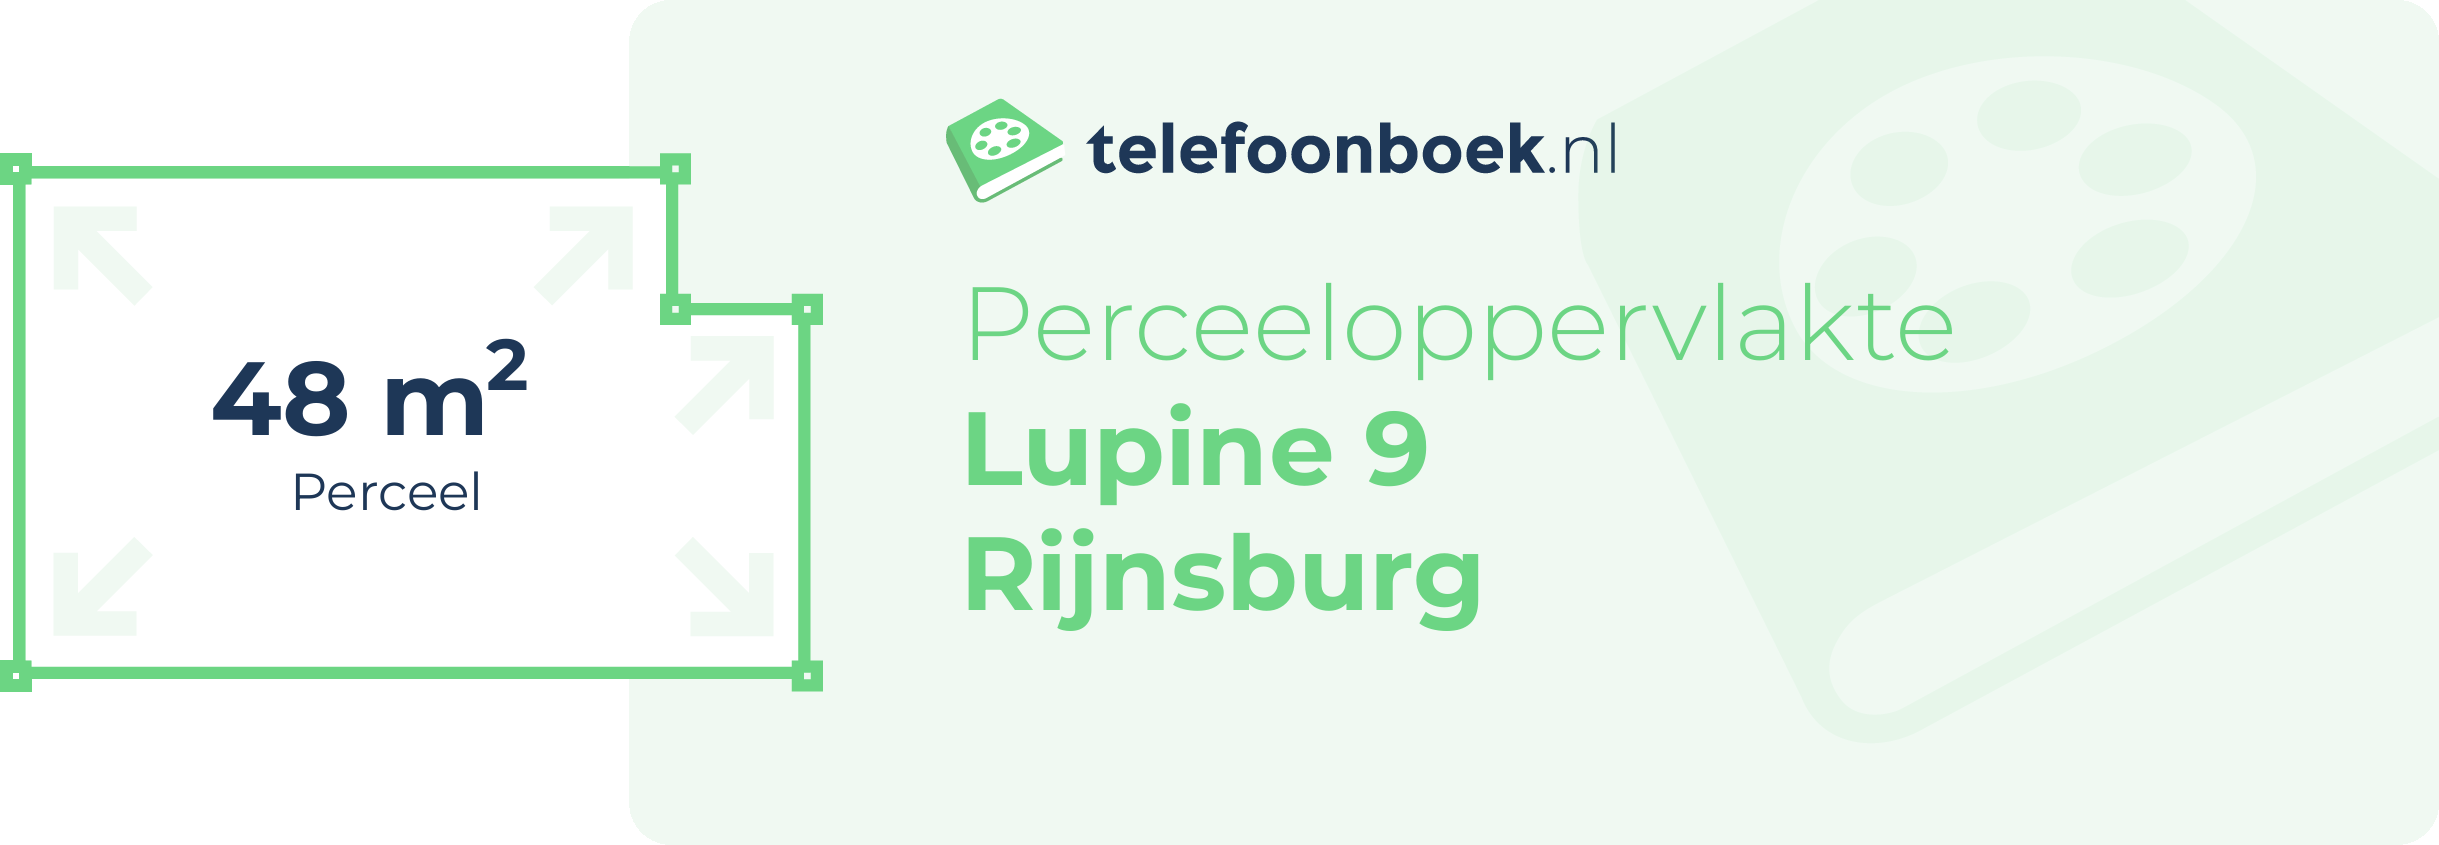 Perceeloppervlakte Lupine 9 Rijnsburg